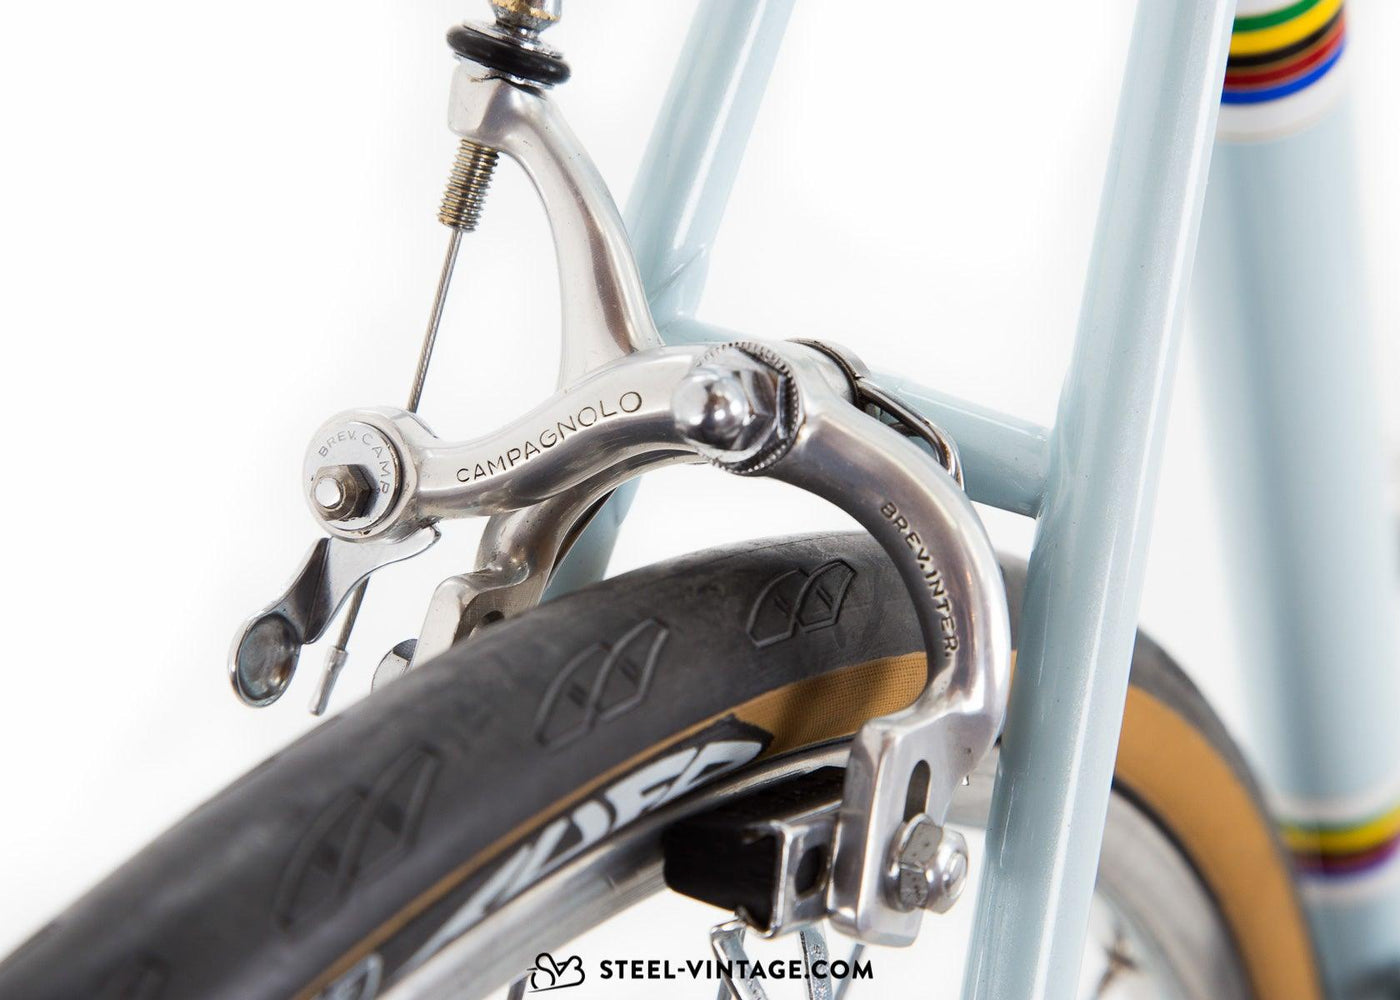 Guerciotti Super Record Fine Road Bicycle 1980s - Steel Vintage Bikes